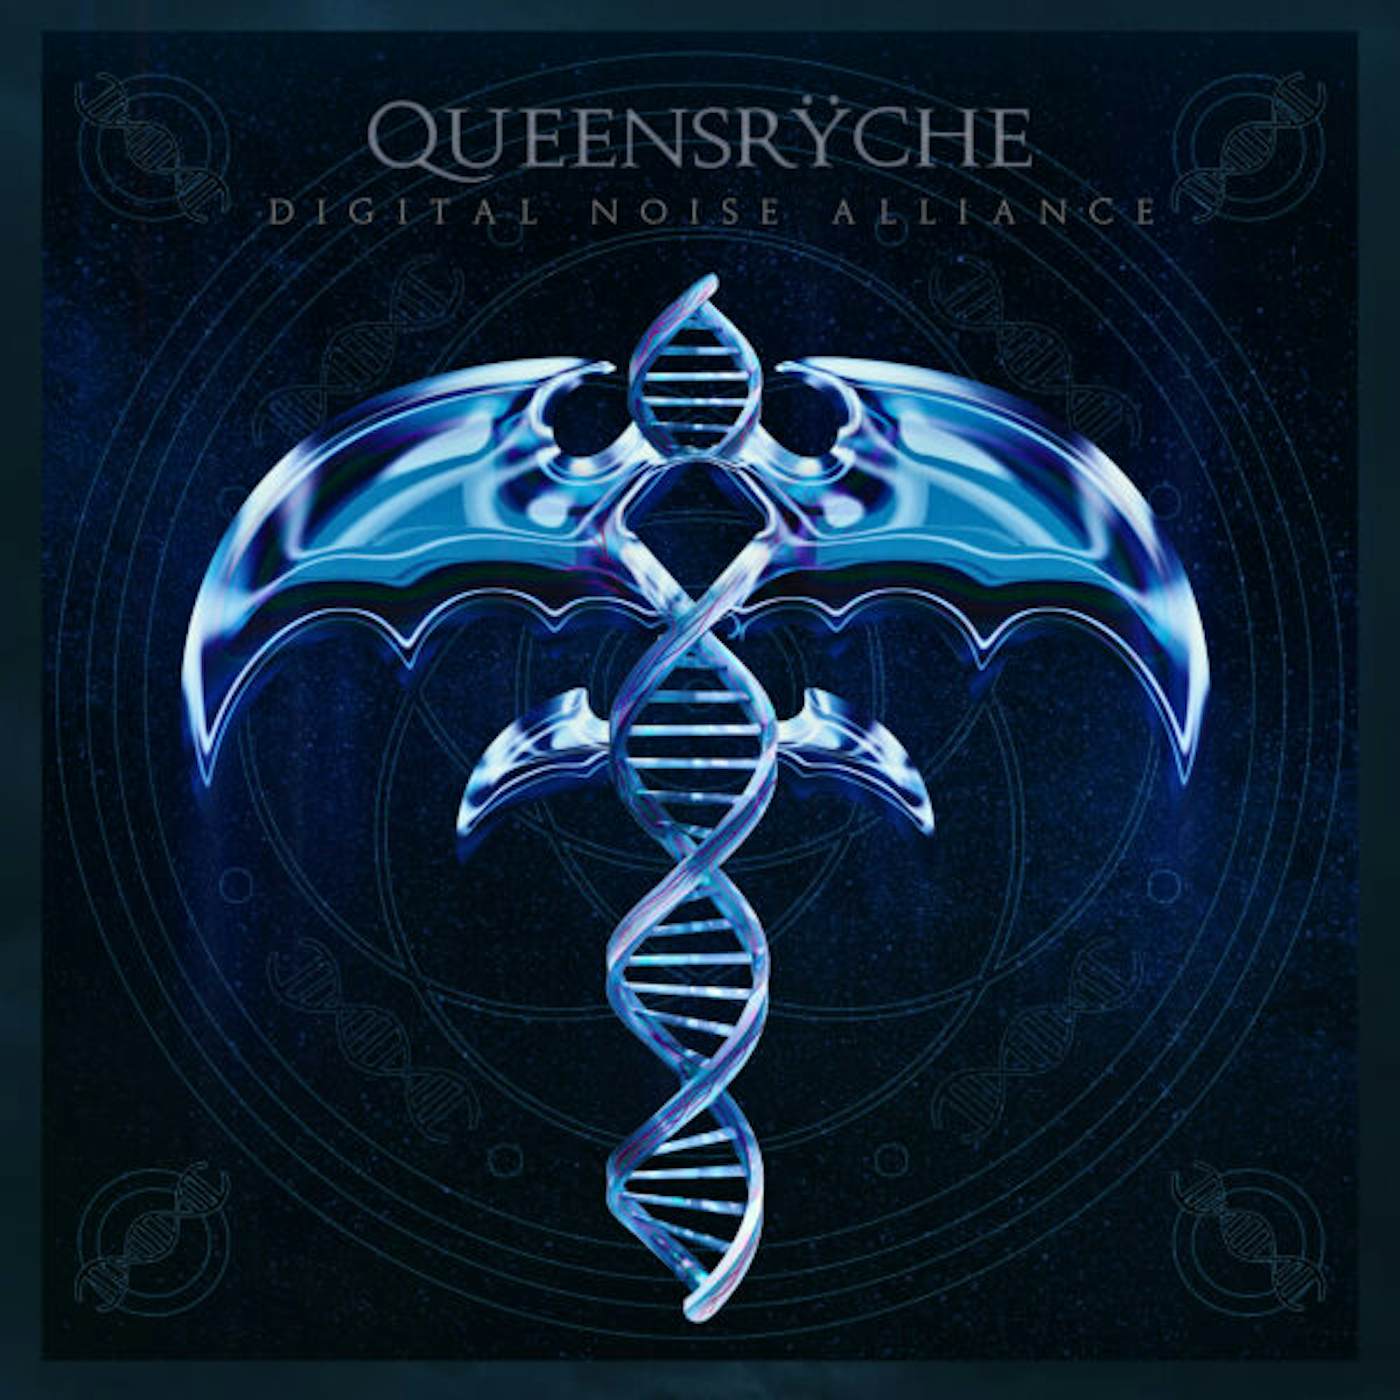 Queensrÿche Digital Noise Alliance vinyl record